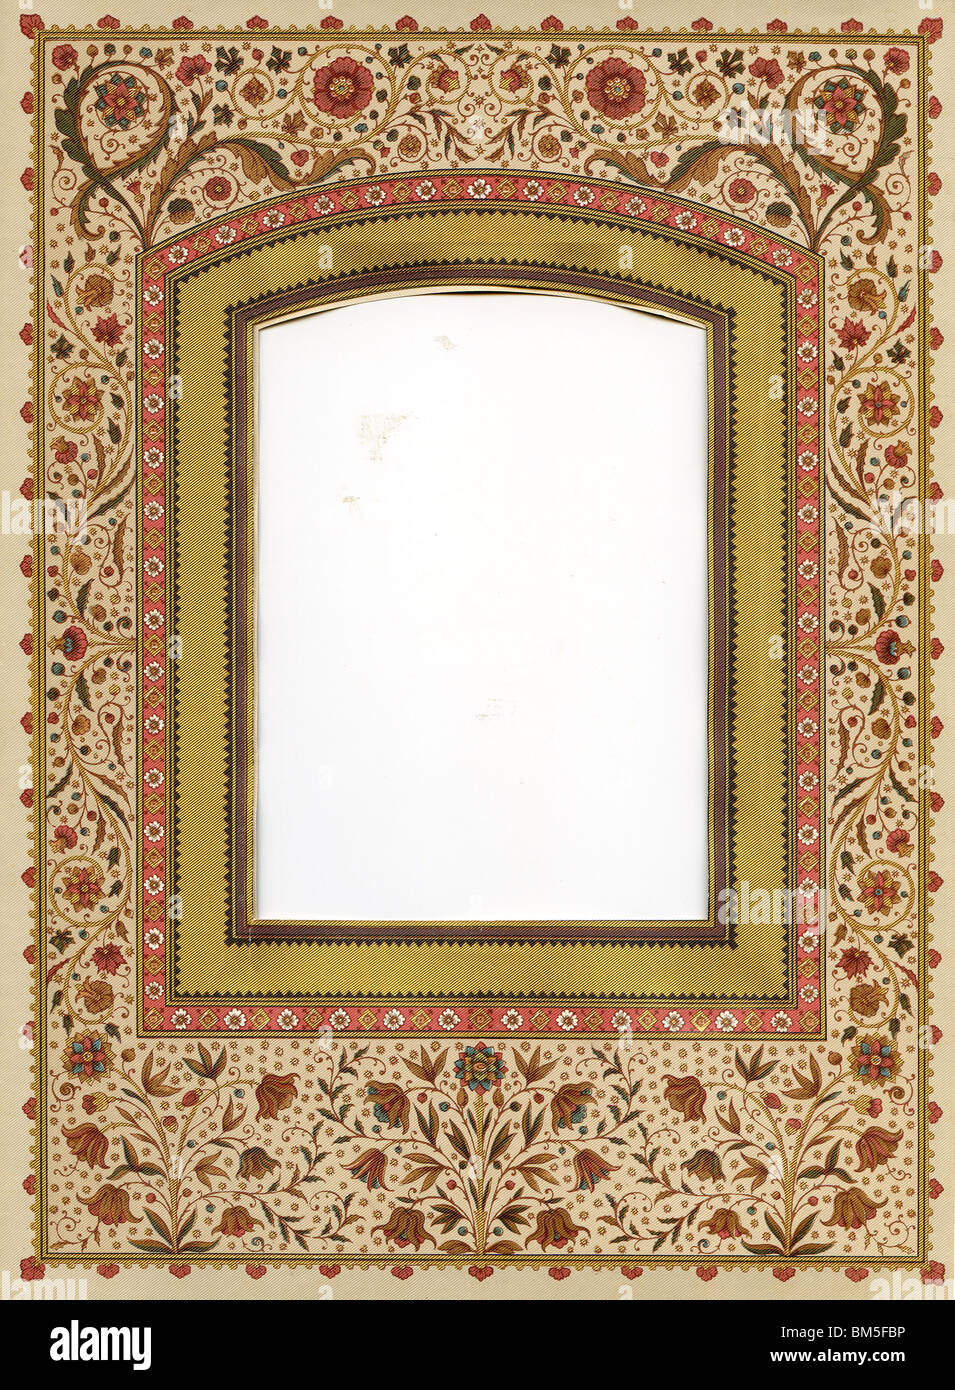 Decorative Photo Album Page - Late 1800's Stock Photo